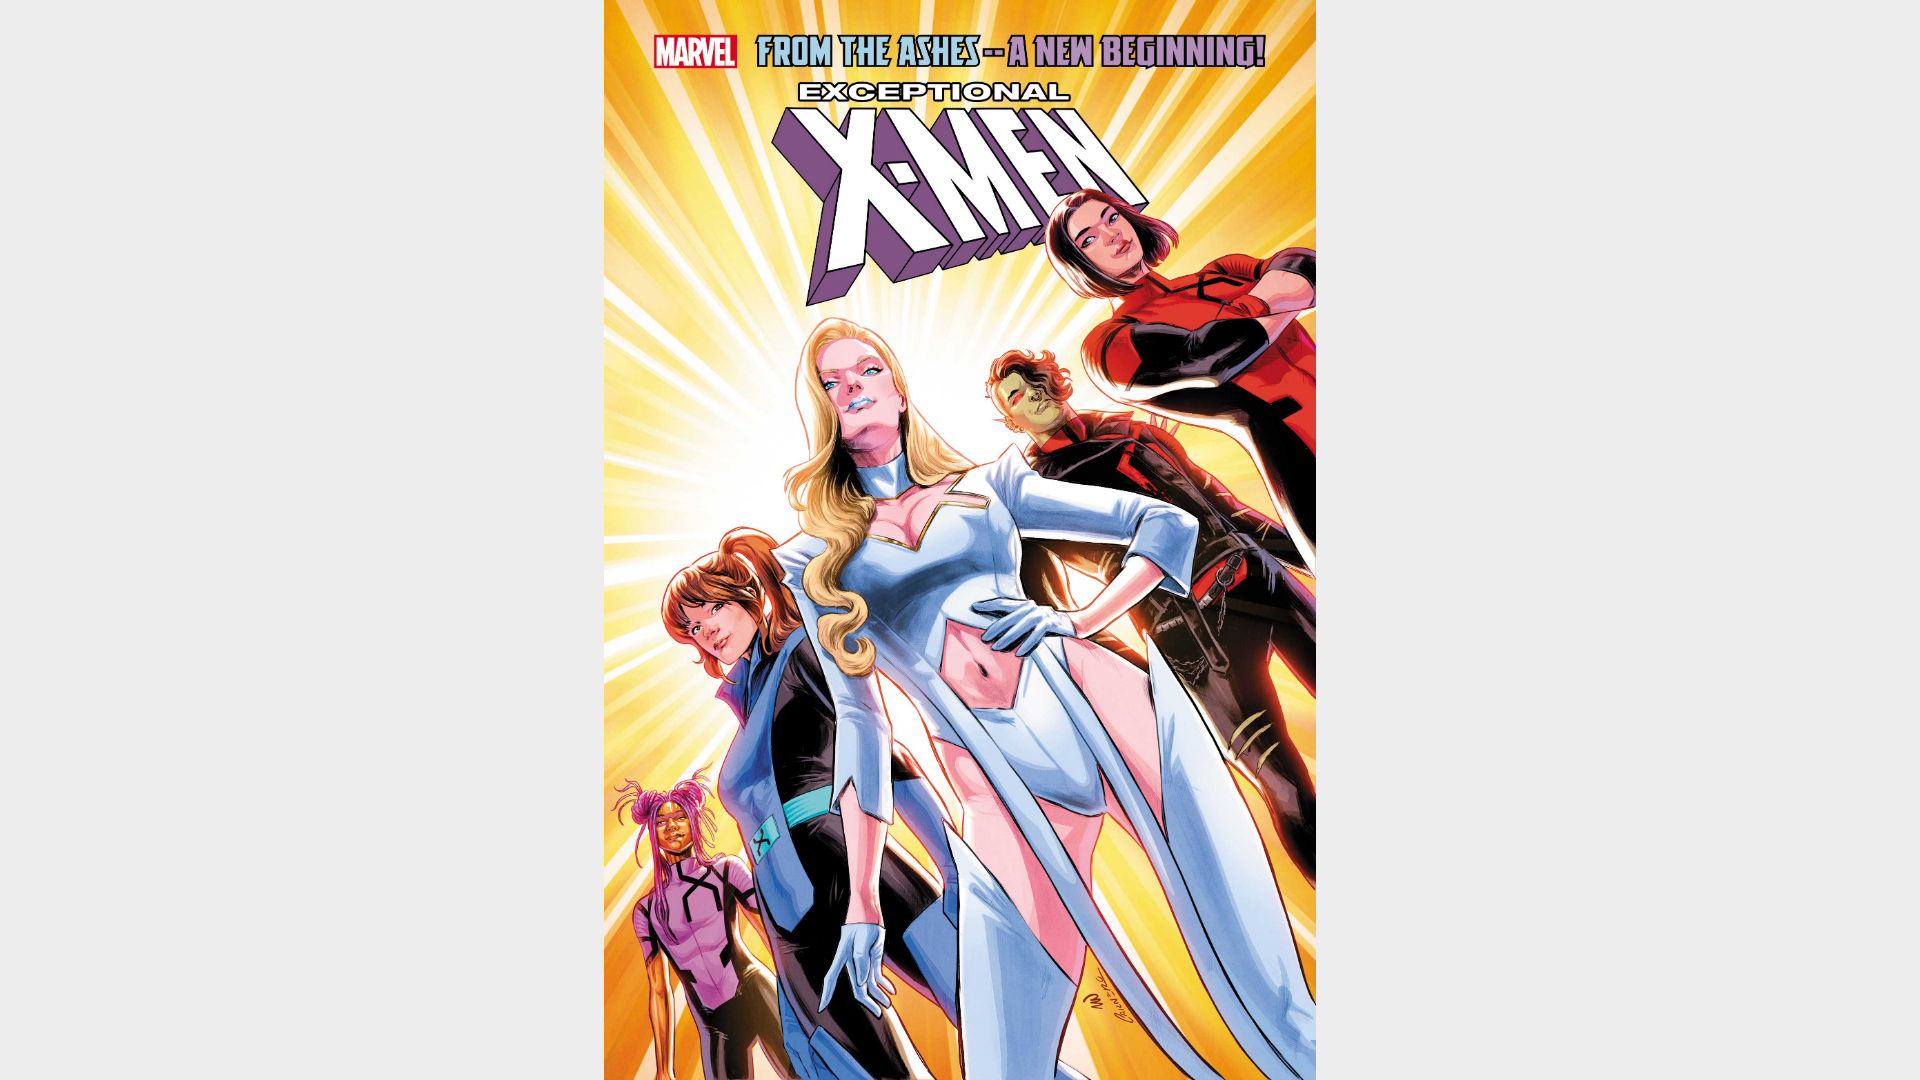 Exceptional X-Men #1